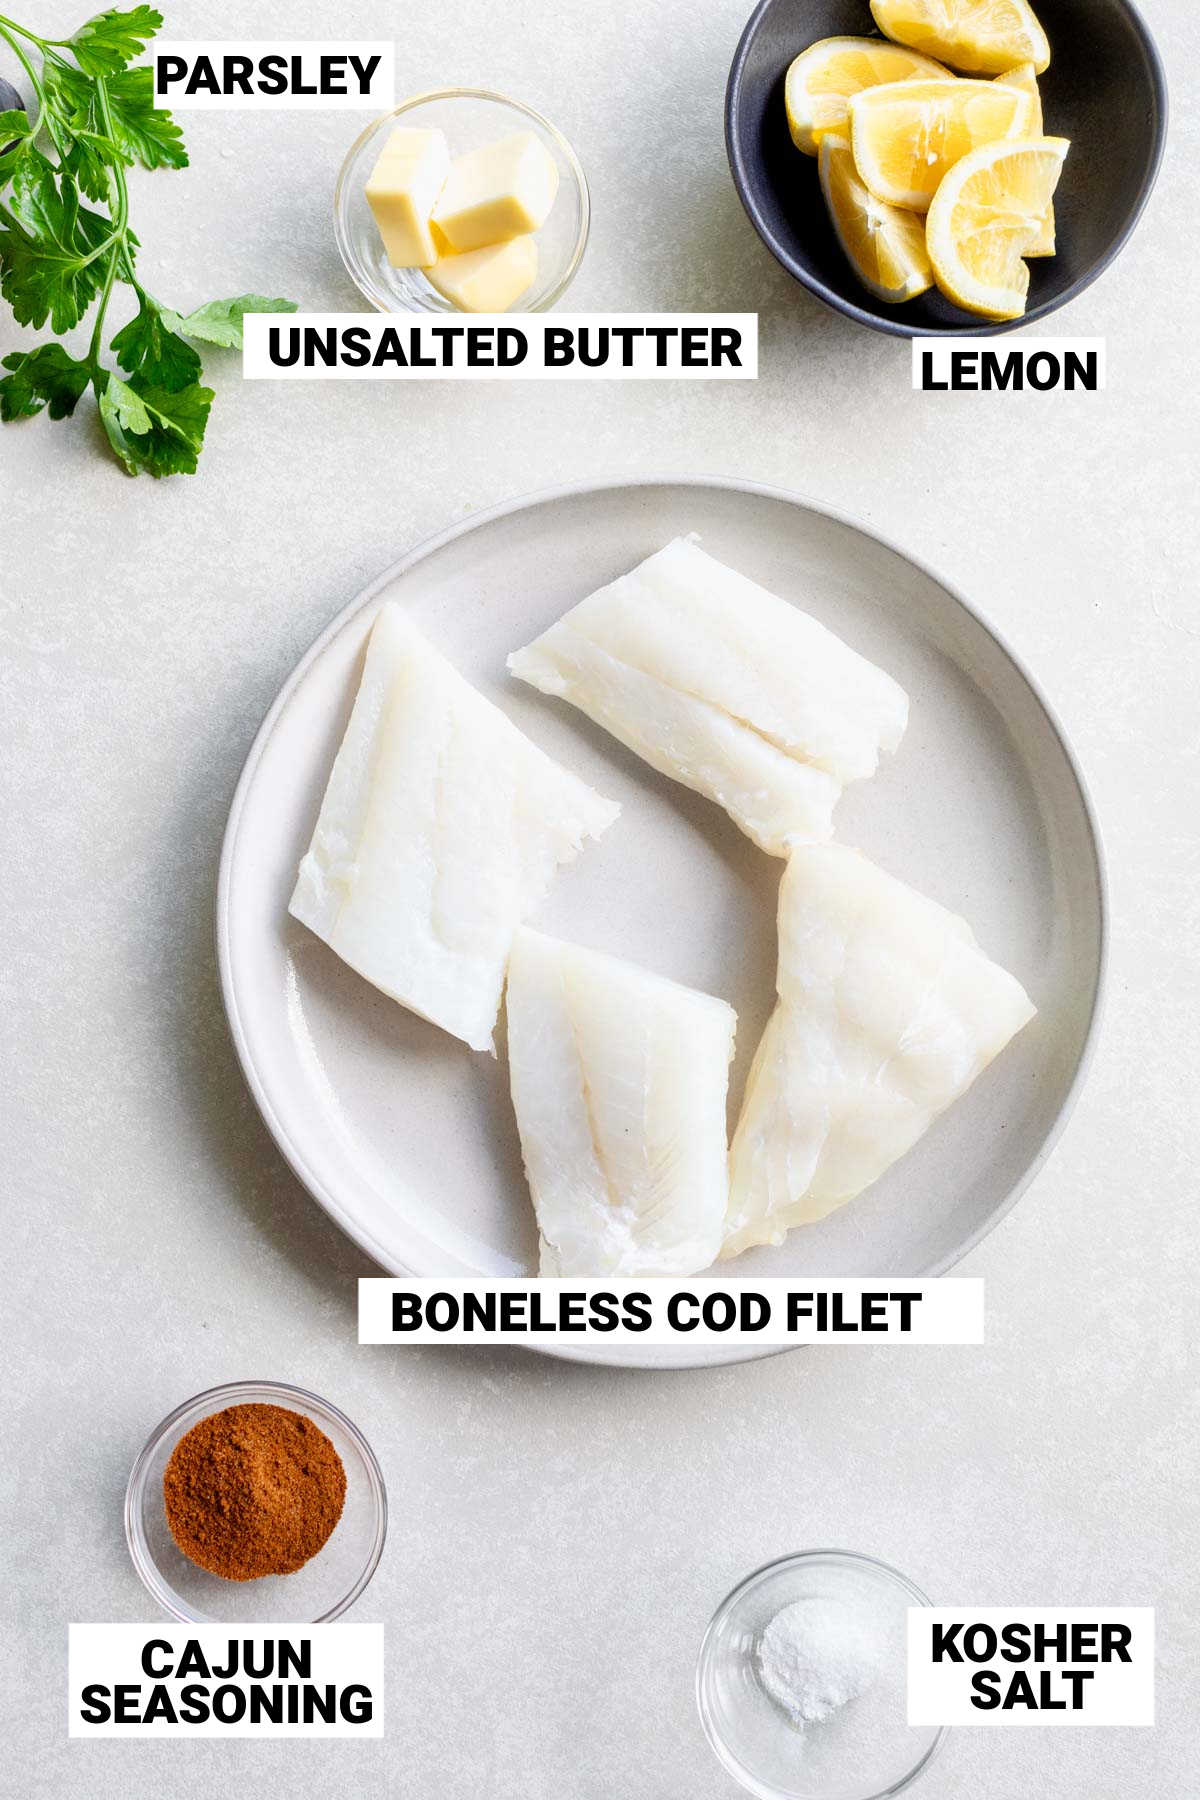 ingredients to make blackened cod including cod fillets, parsley, unsalted butter, lemon, cajun seasoning and kosher salt